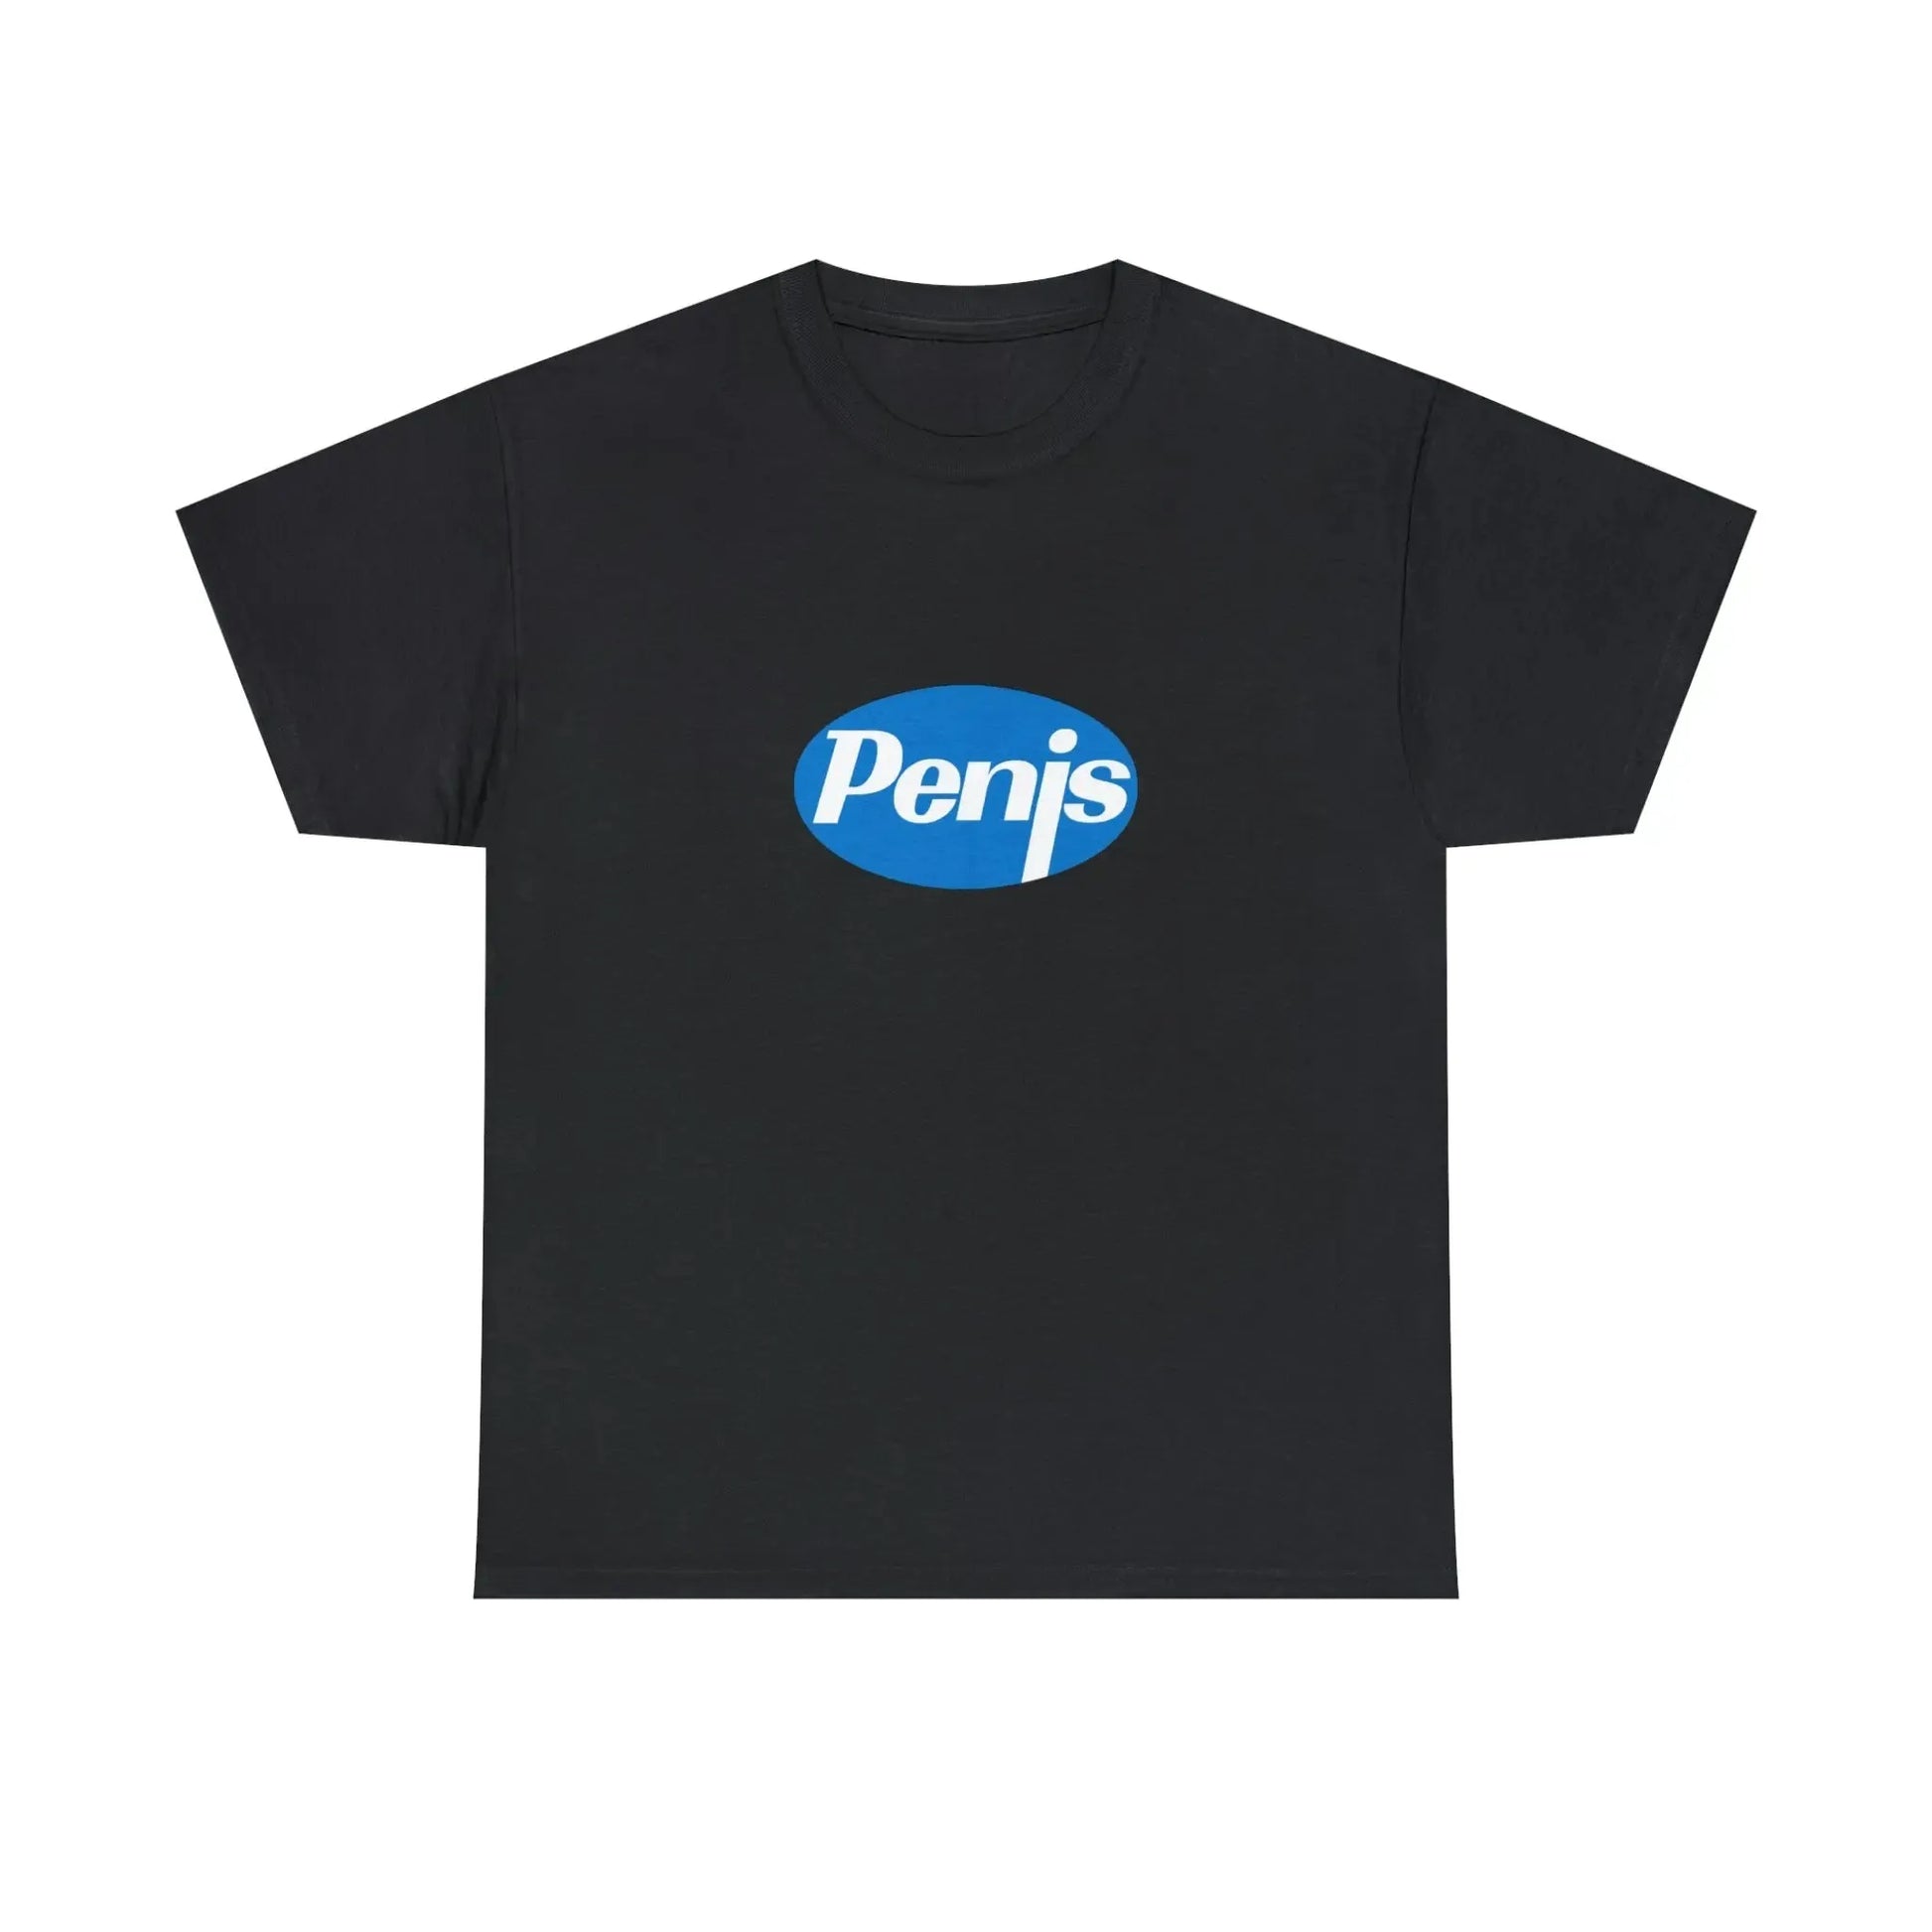 Pfizer Penis T-Shirt - Failure International failureinternational.com store brand tiktok instagram